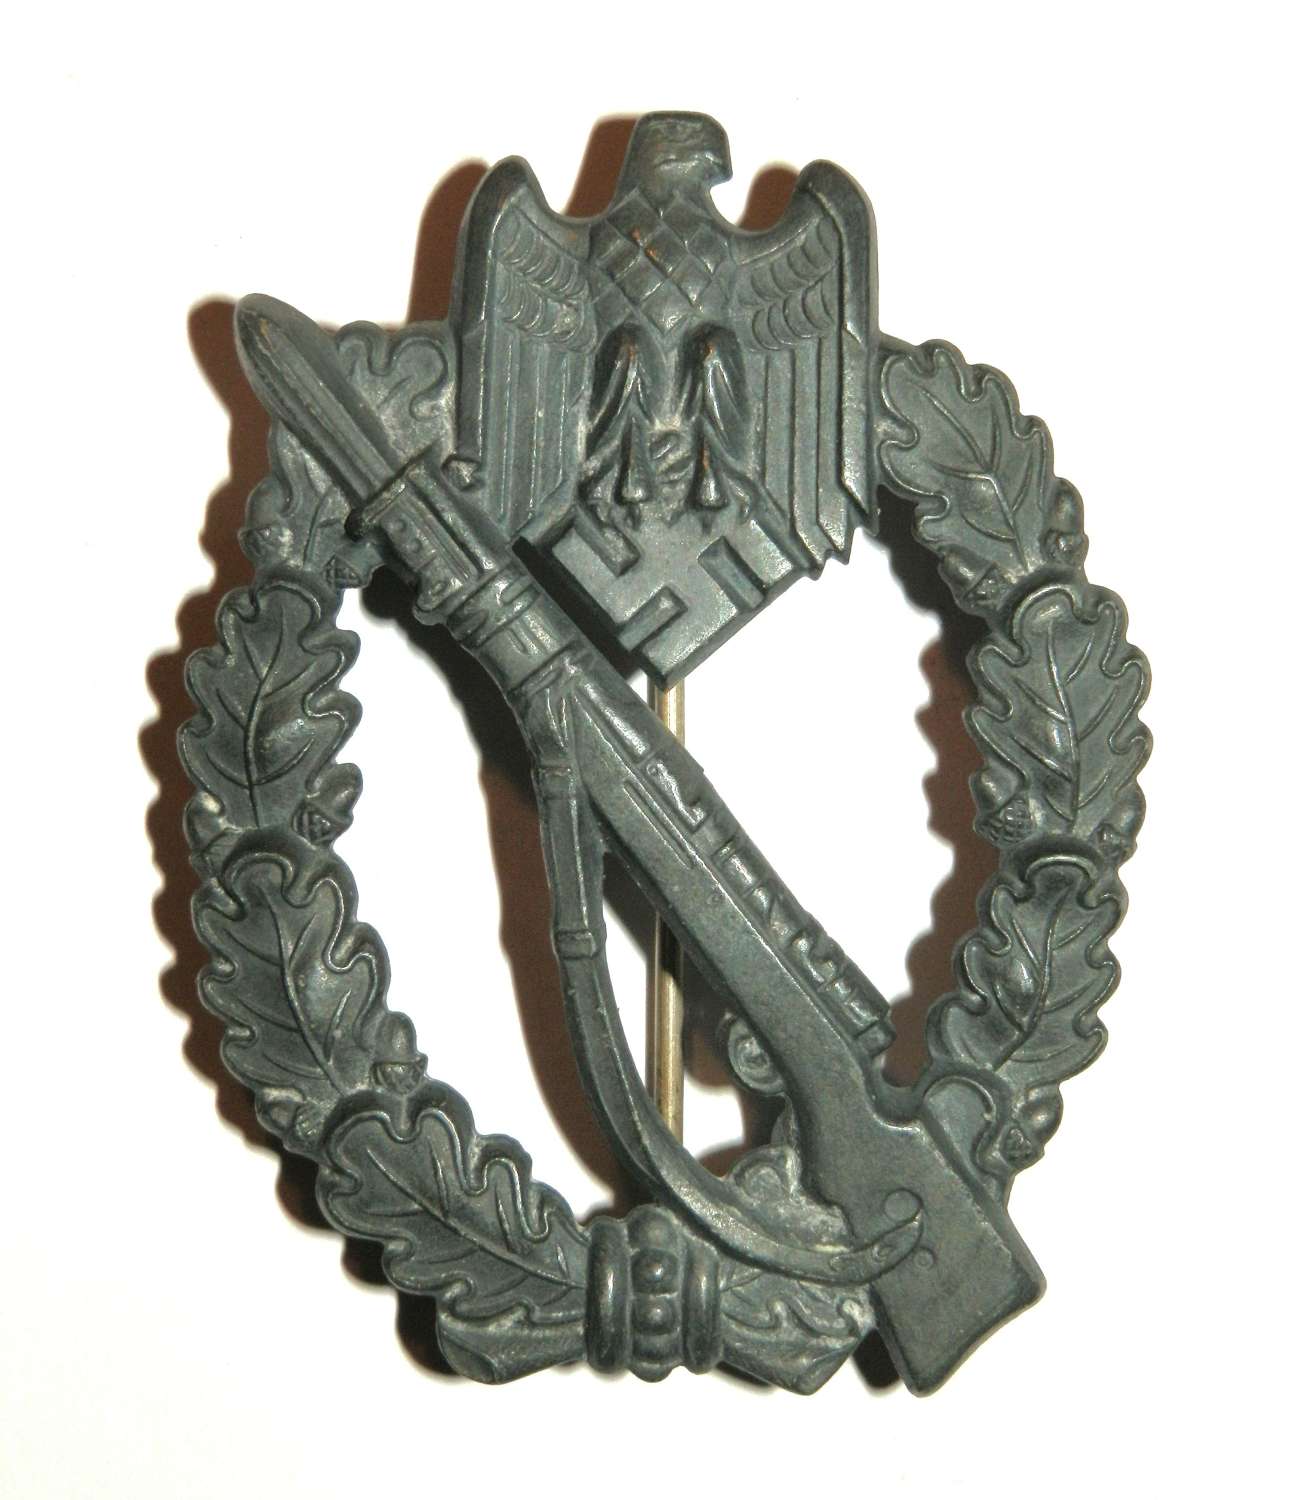 German Infantry Assault Badge. By ‘Idar Oberstein’.